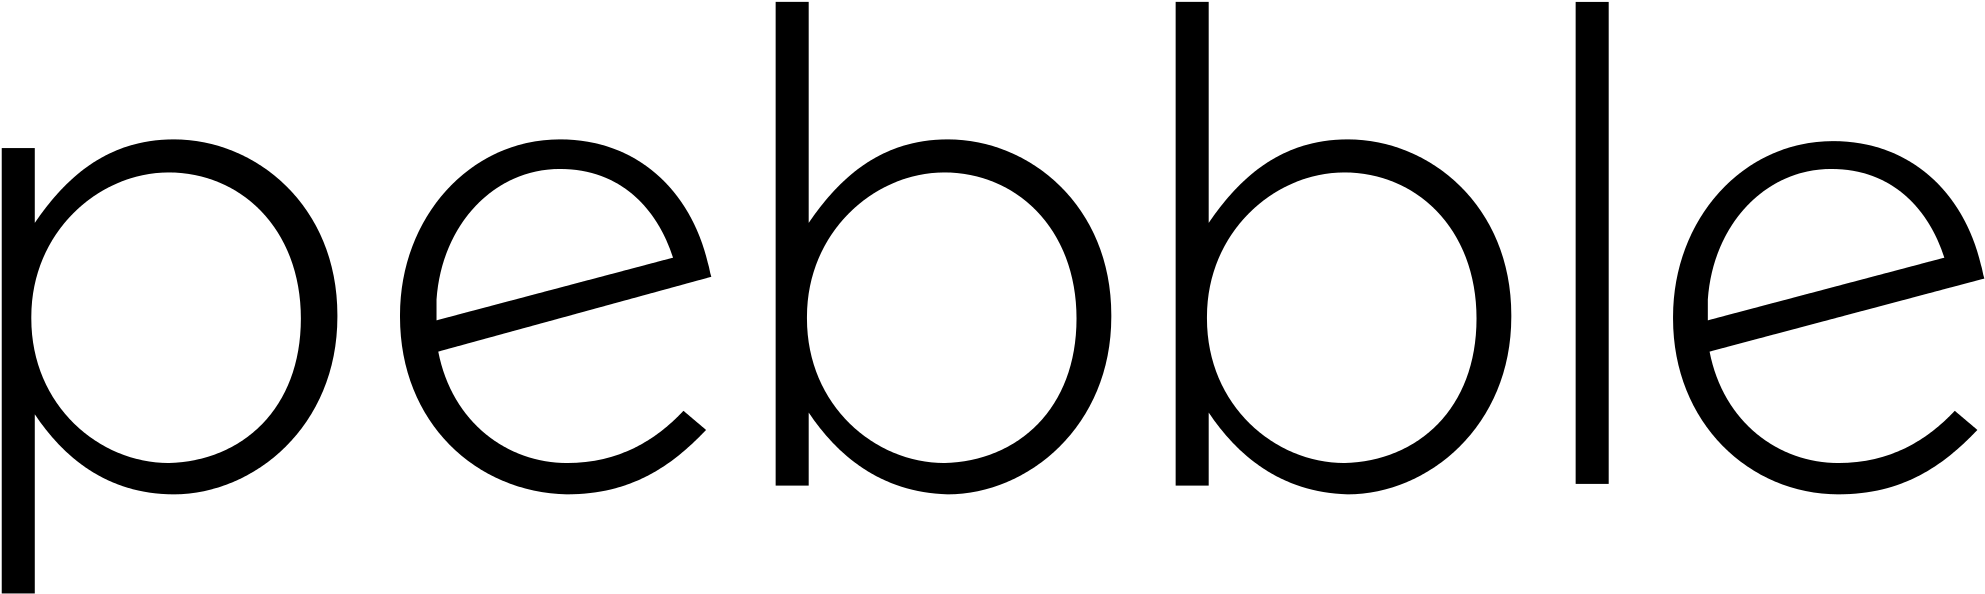 Pebble Time Logo Png (2000x609)